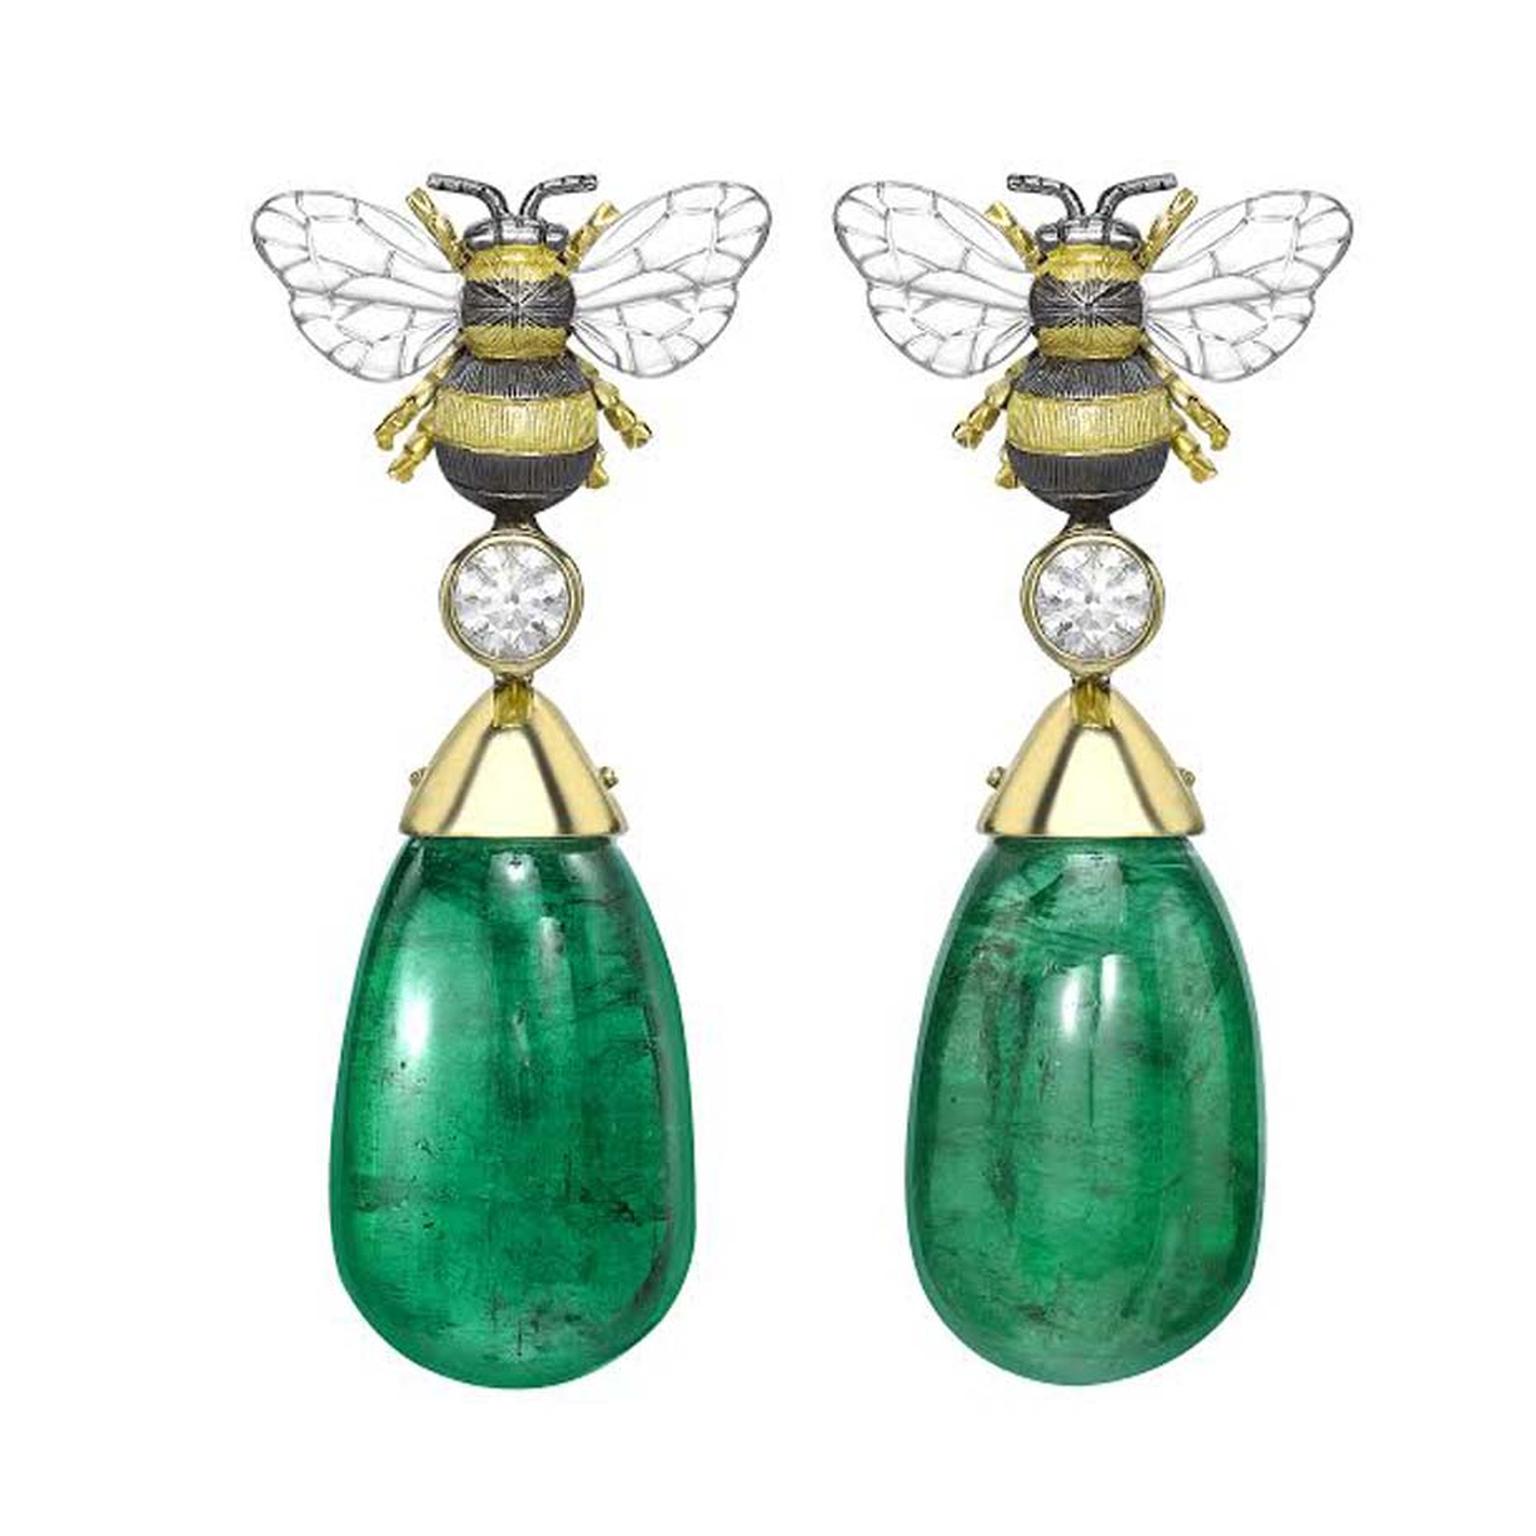 Theo Fennell Gemfields Emerald Bee Drop earrings in 18ct yellow gold with Gemfields Zambian emeralds and white diamonds.